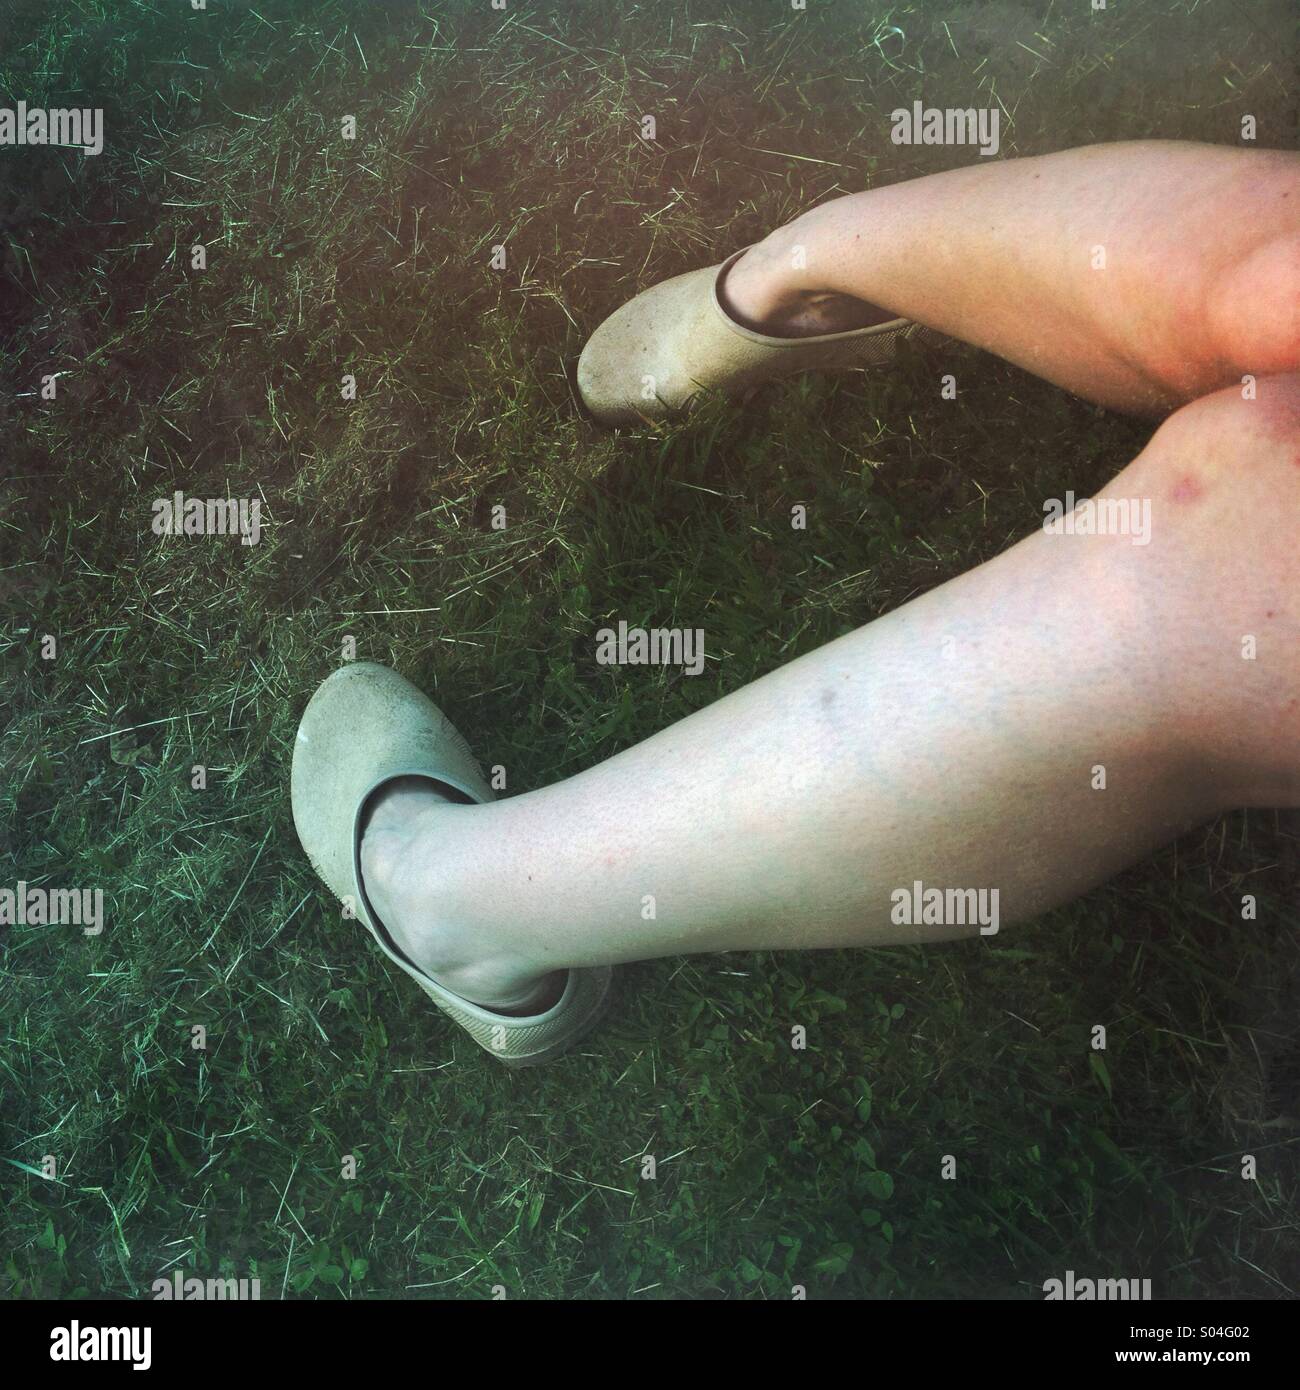 Woman's legs in grass wearing gardening clogs Stock Photo